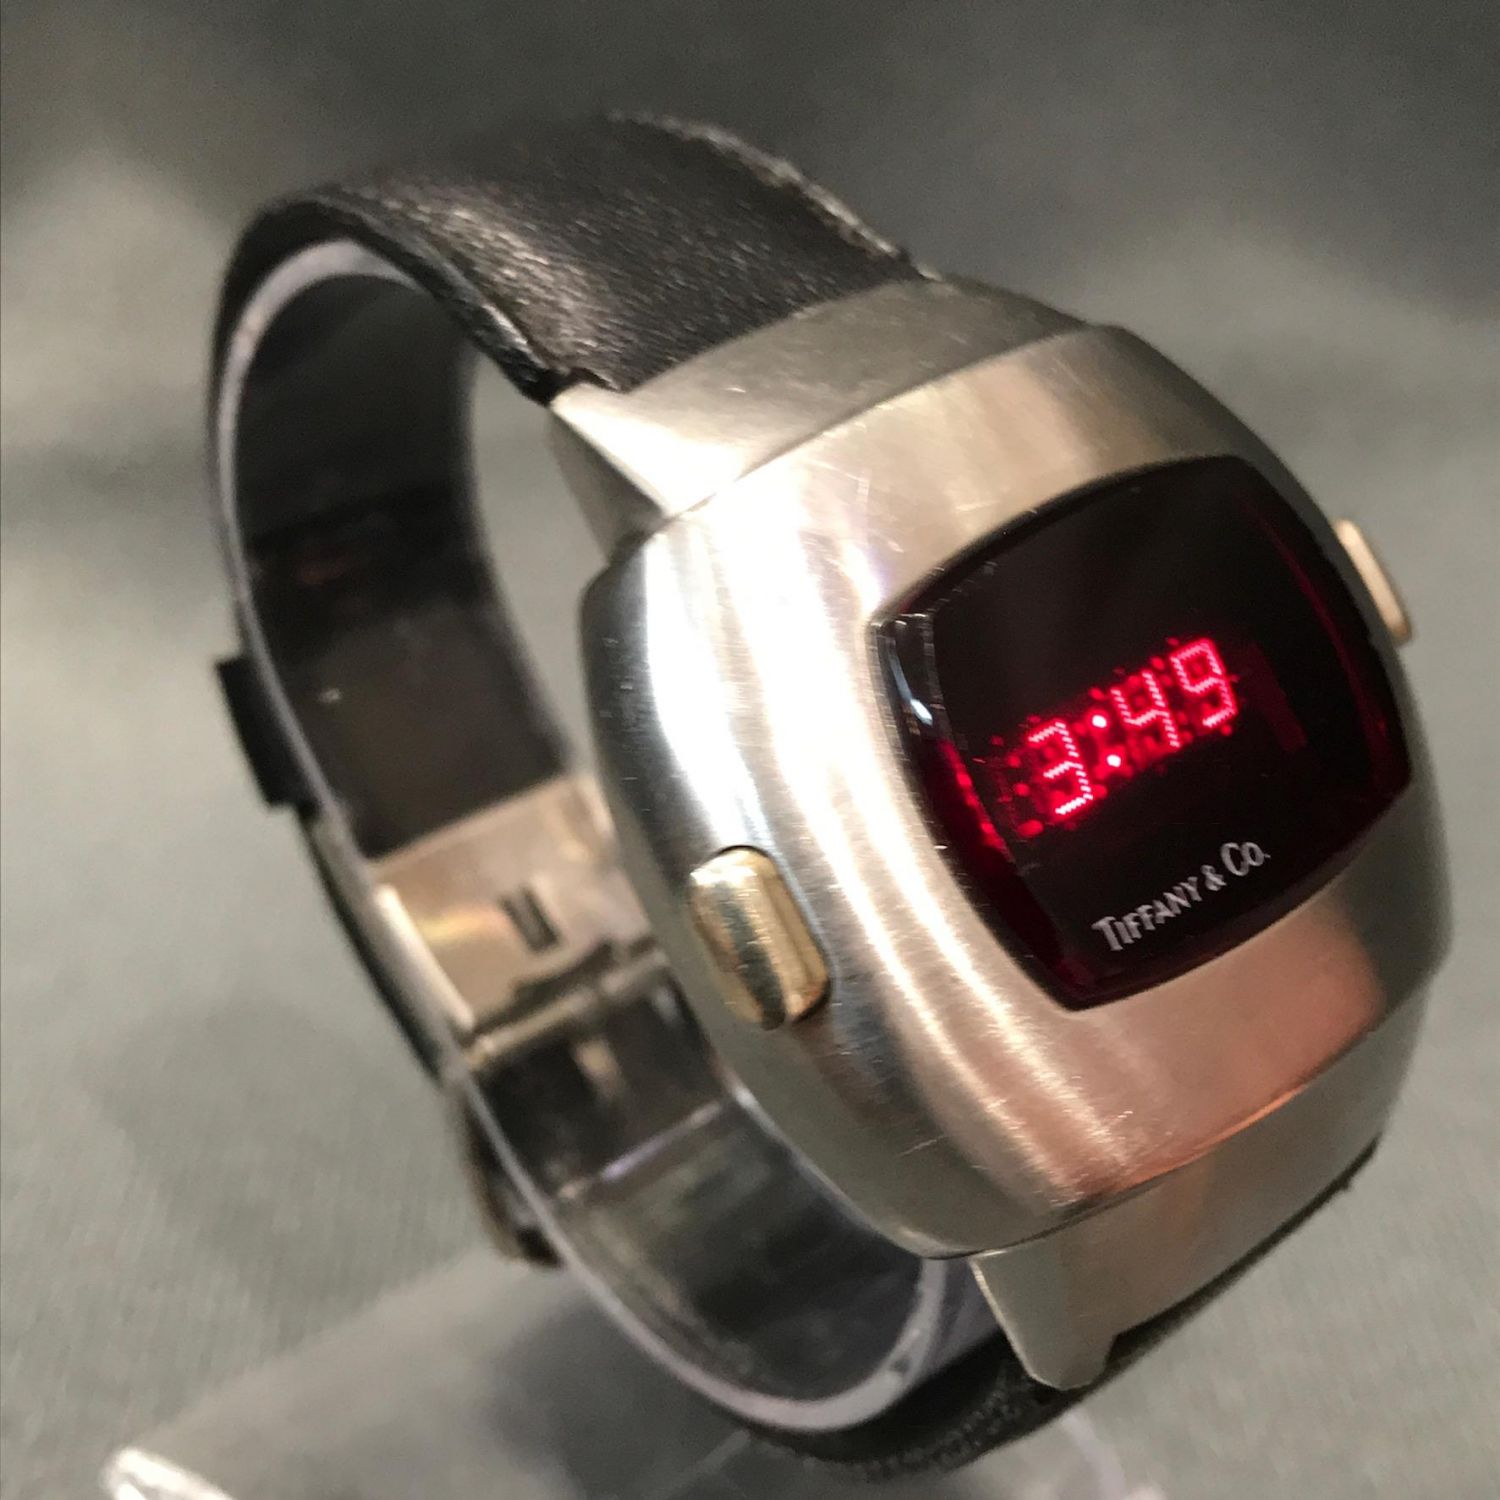 tiffany wrist watch band replacement